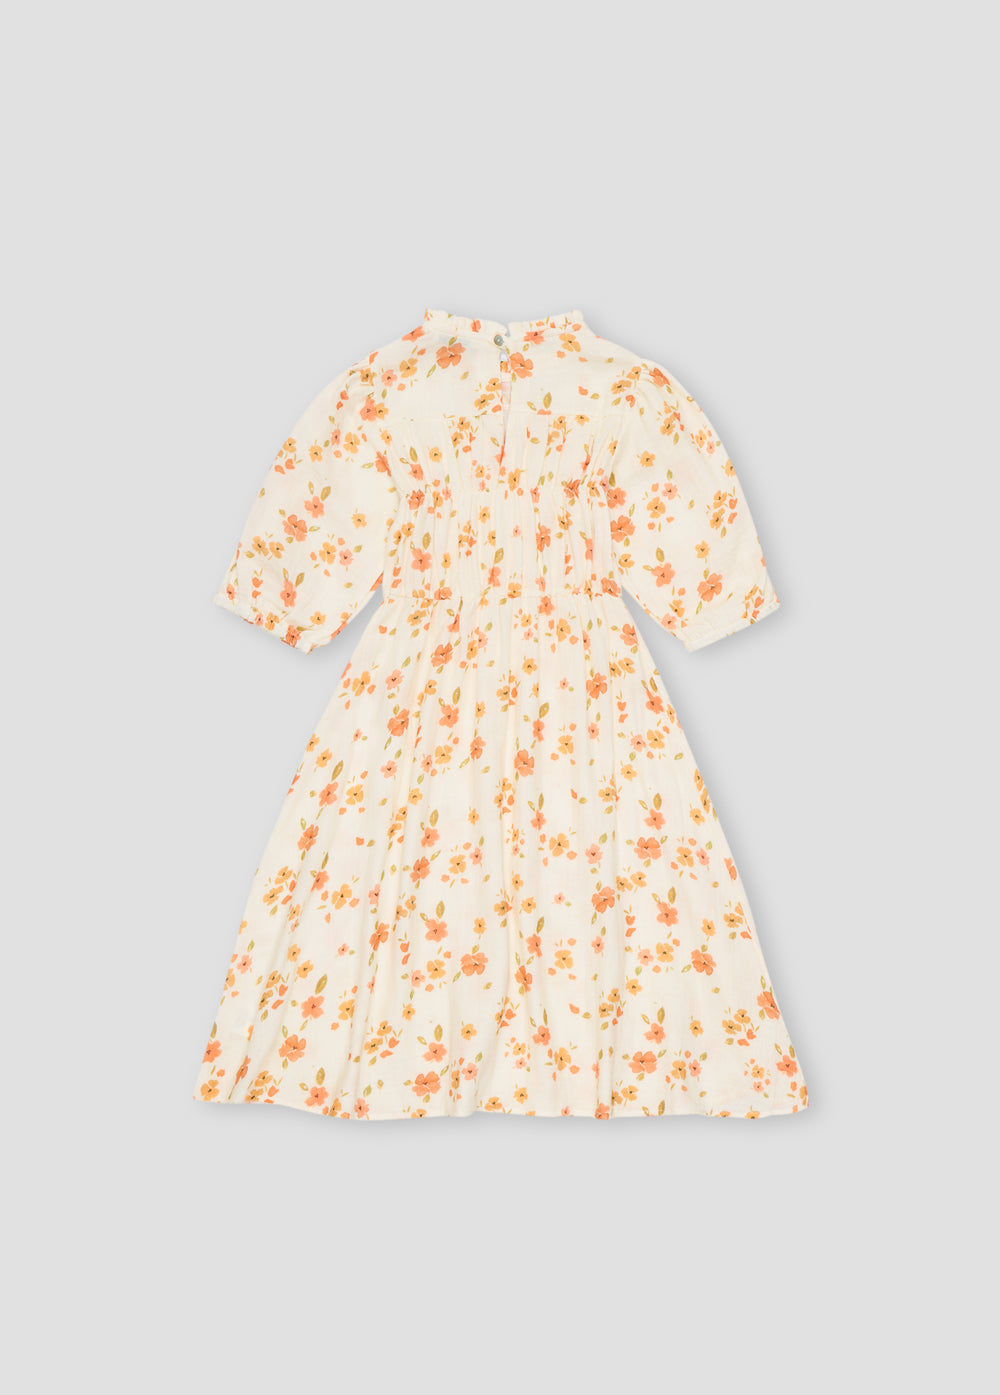 Fiorella Special Dress_Sampling